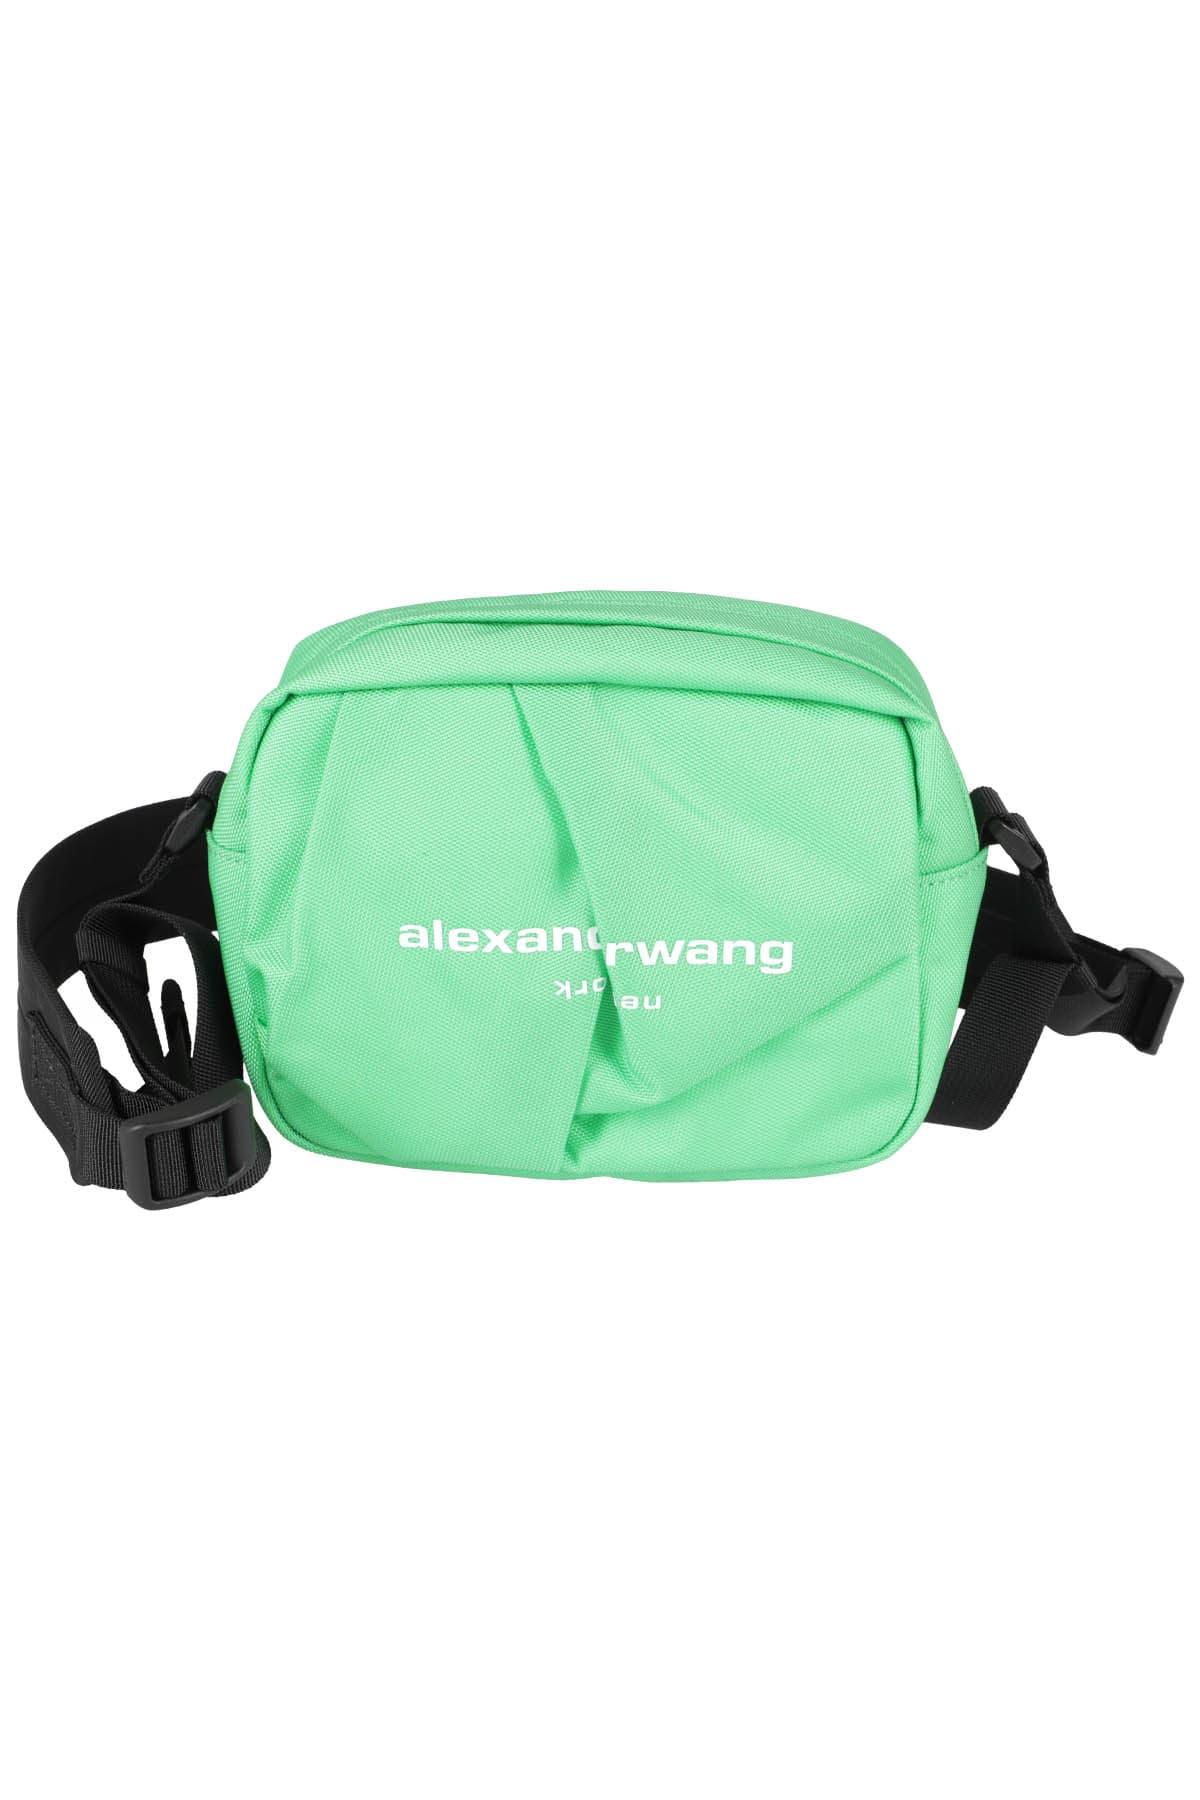 Alexander Wang Wangsport Logo Printed Camera Bag in Green | Lyst